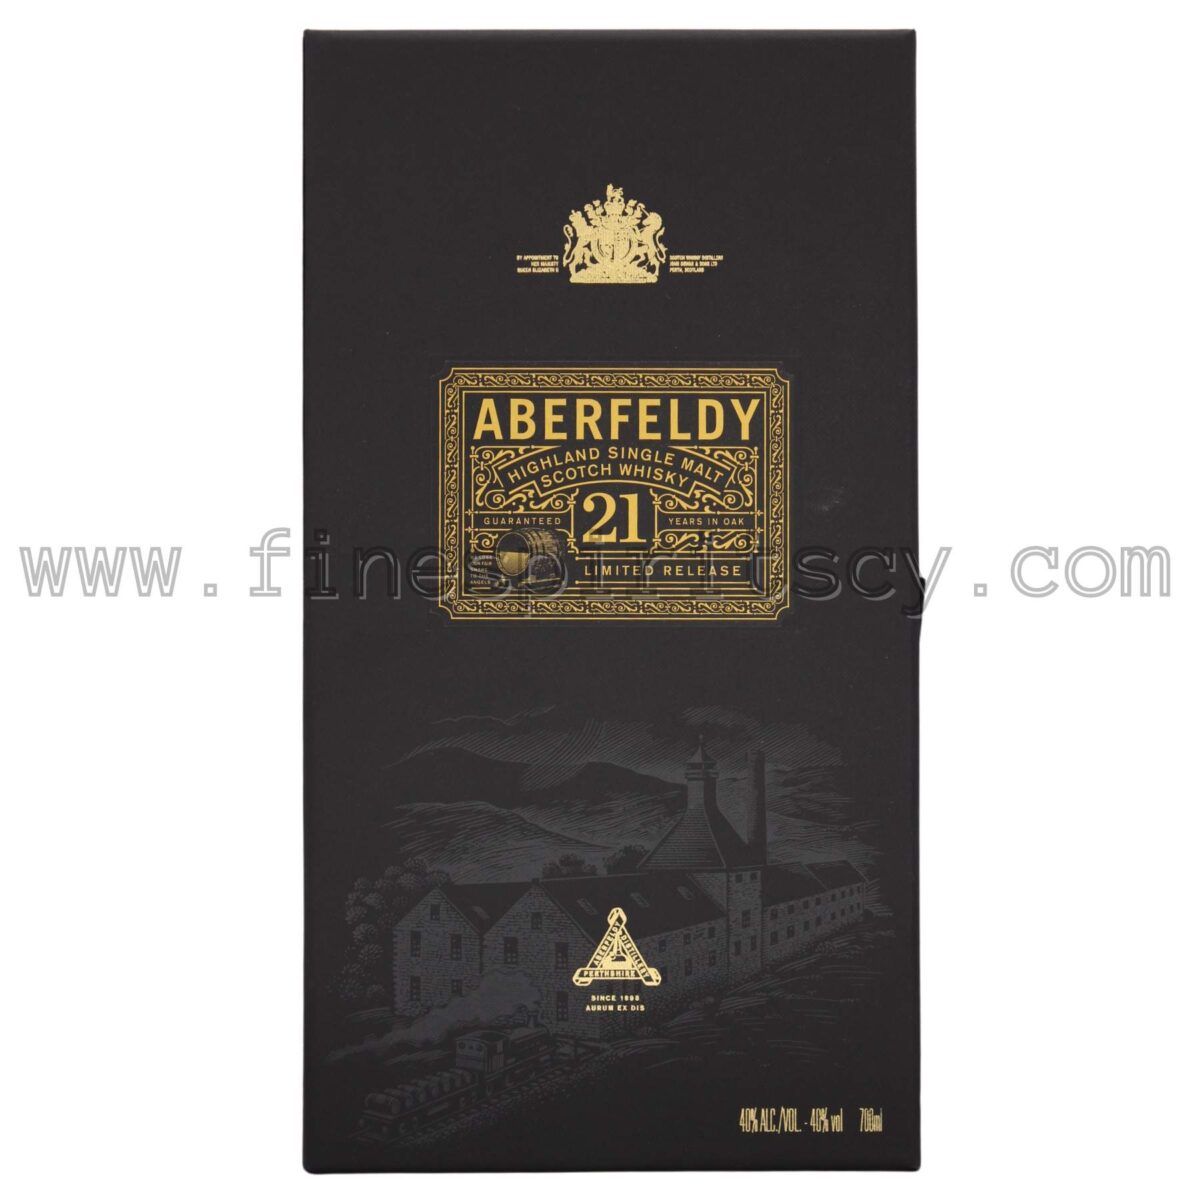 Aberfeldy 21 Year Old Highland Scotch Single Malt Whisky Whiskey Cyprus